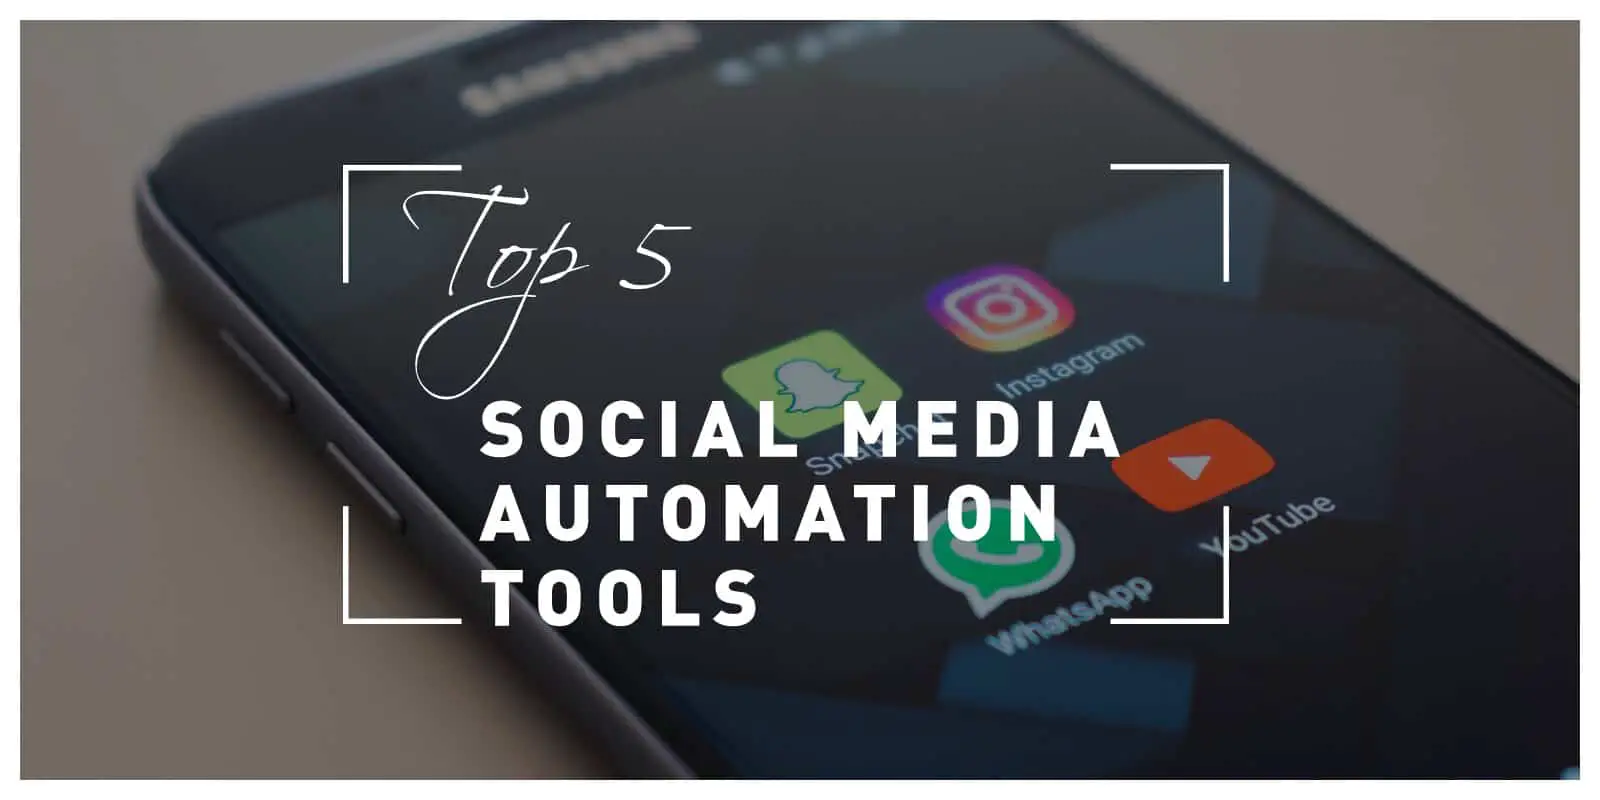 Top 5 Social Media Automation Tools